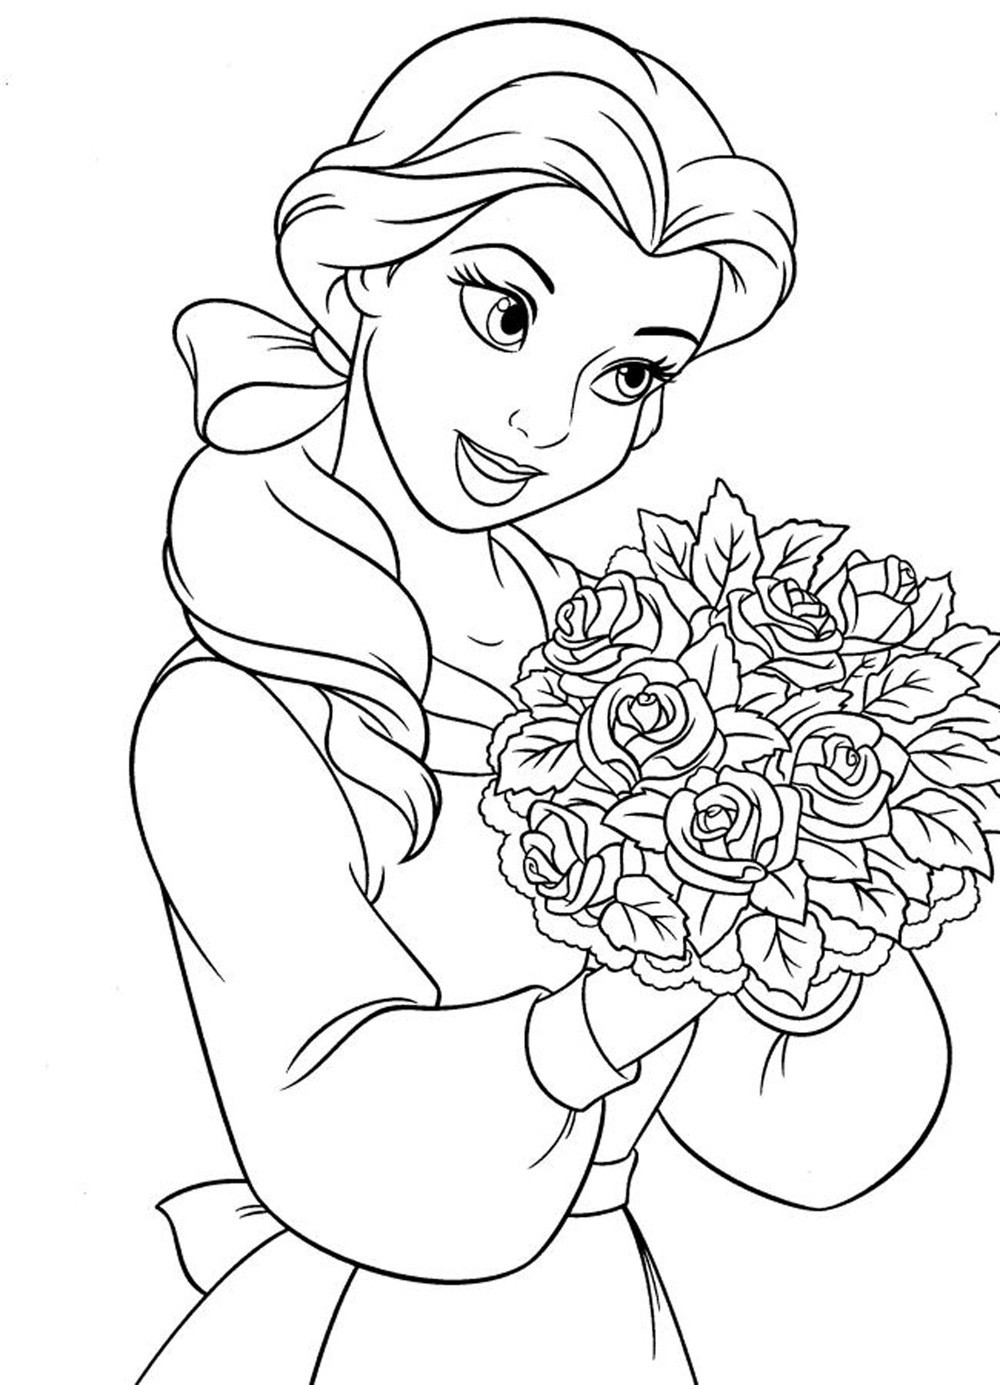 Coloring Pages For Kids Princesses
 Disney Princess Tiana Coloring Page Disney